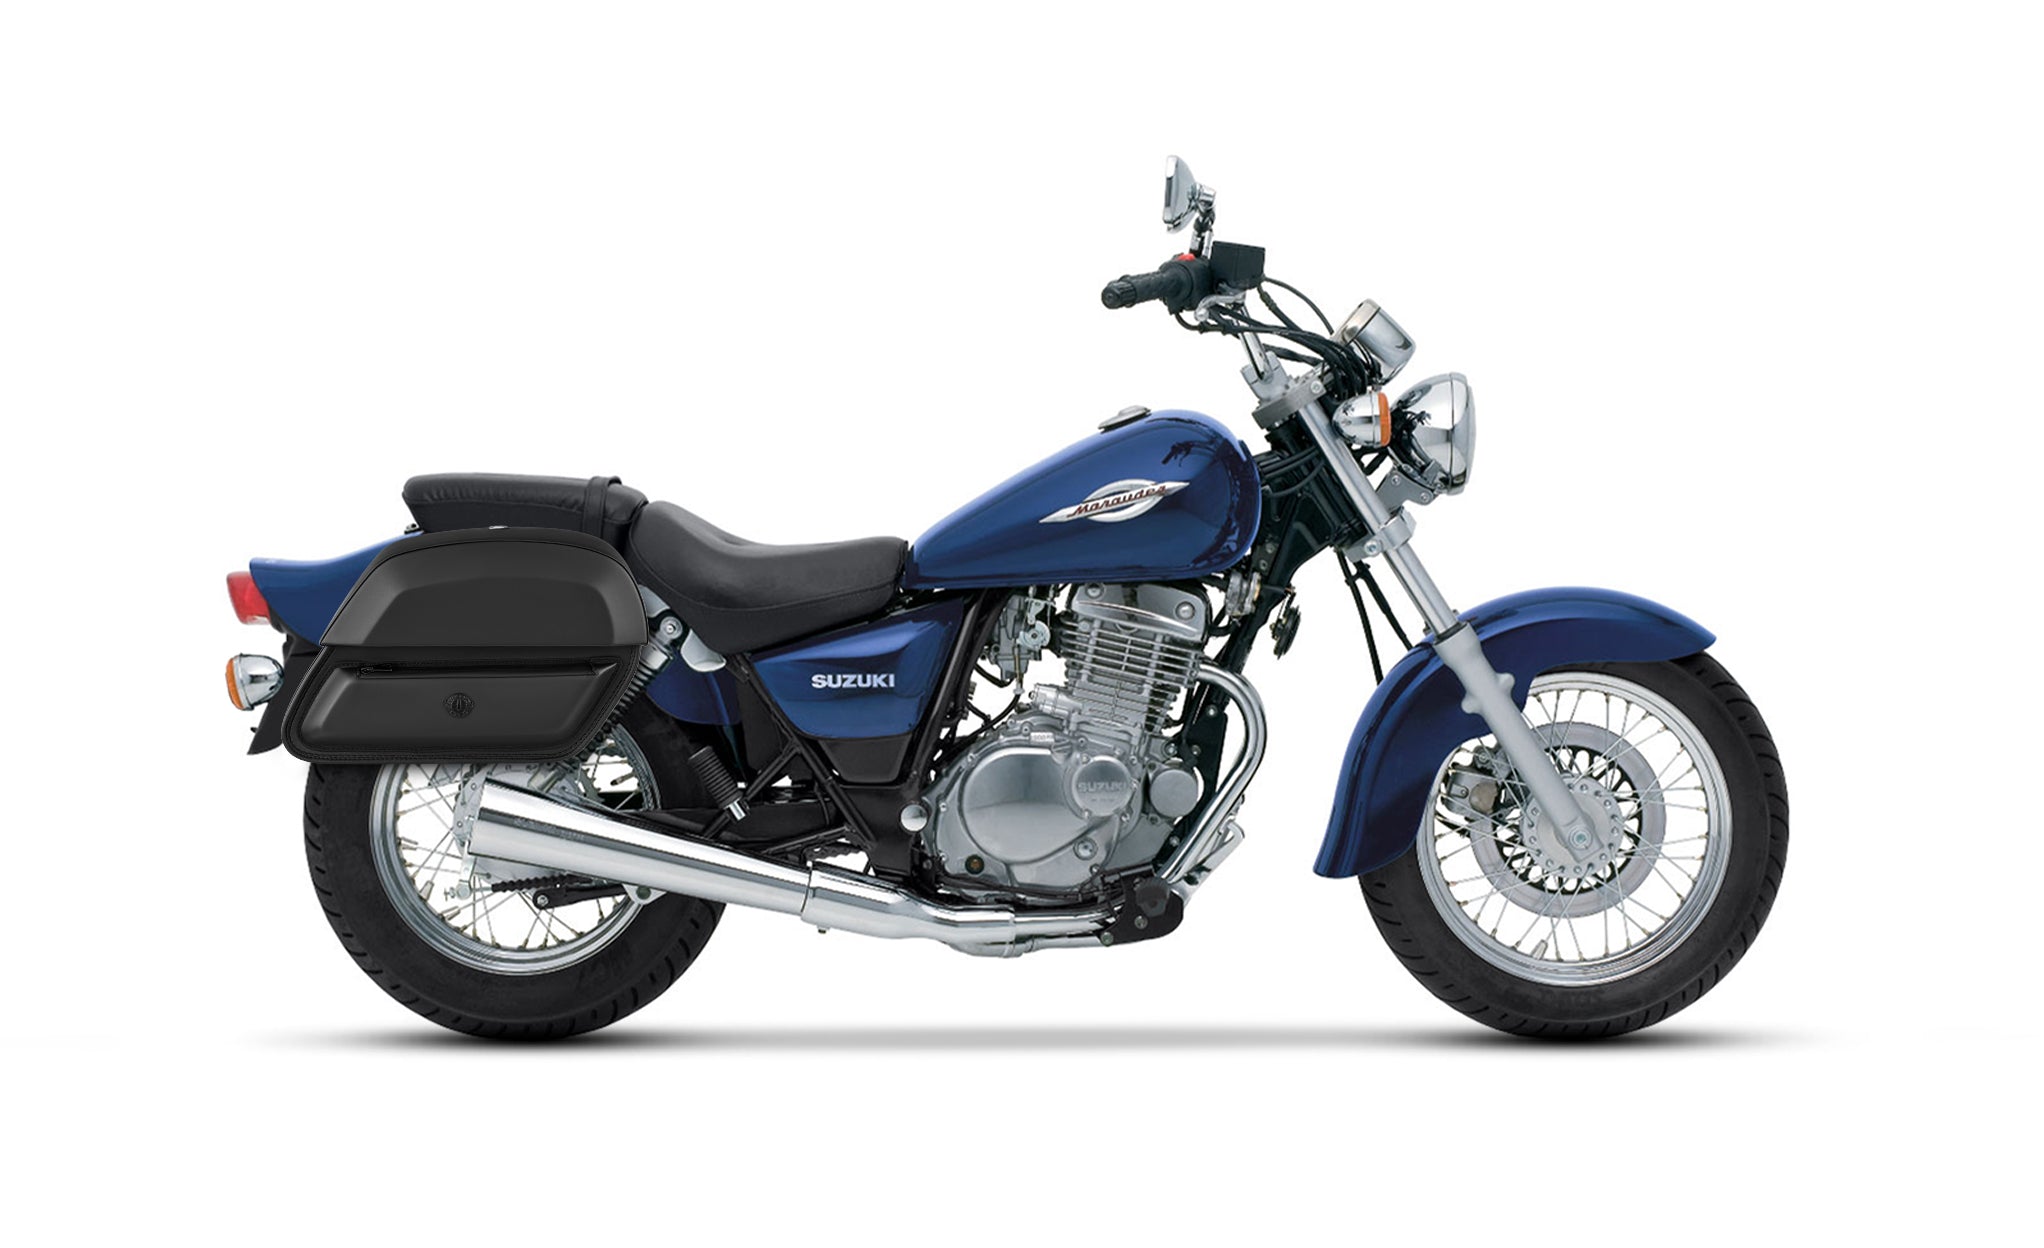 28L - Wraith Medium Marauder GZ250 Leather Motorcycle Saddlebags BAG on Bike View @expand